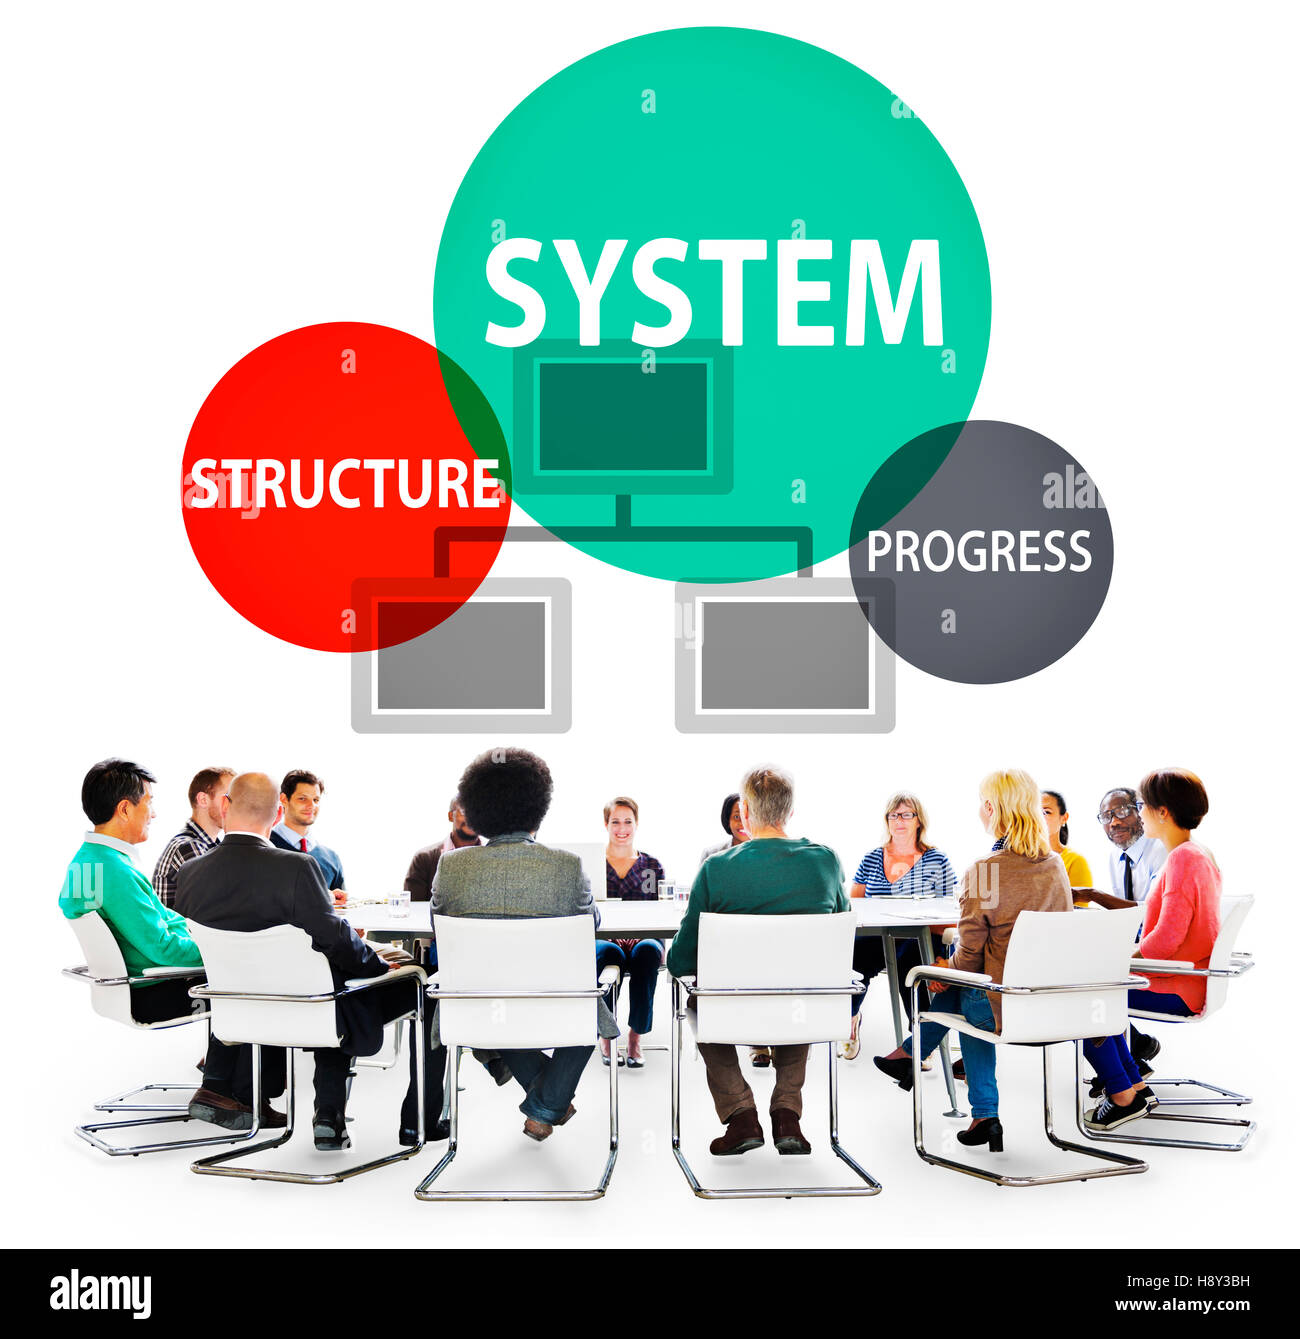 System Structure Progress Processing Procedure Concept Stock Photo